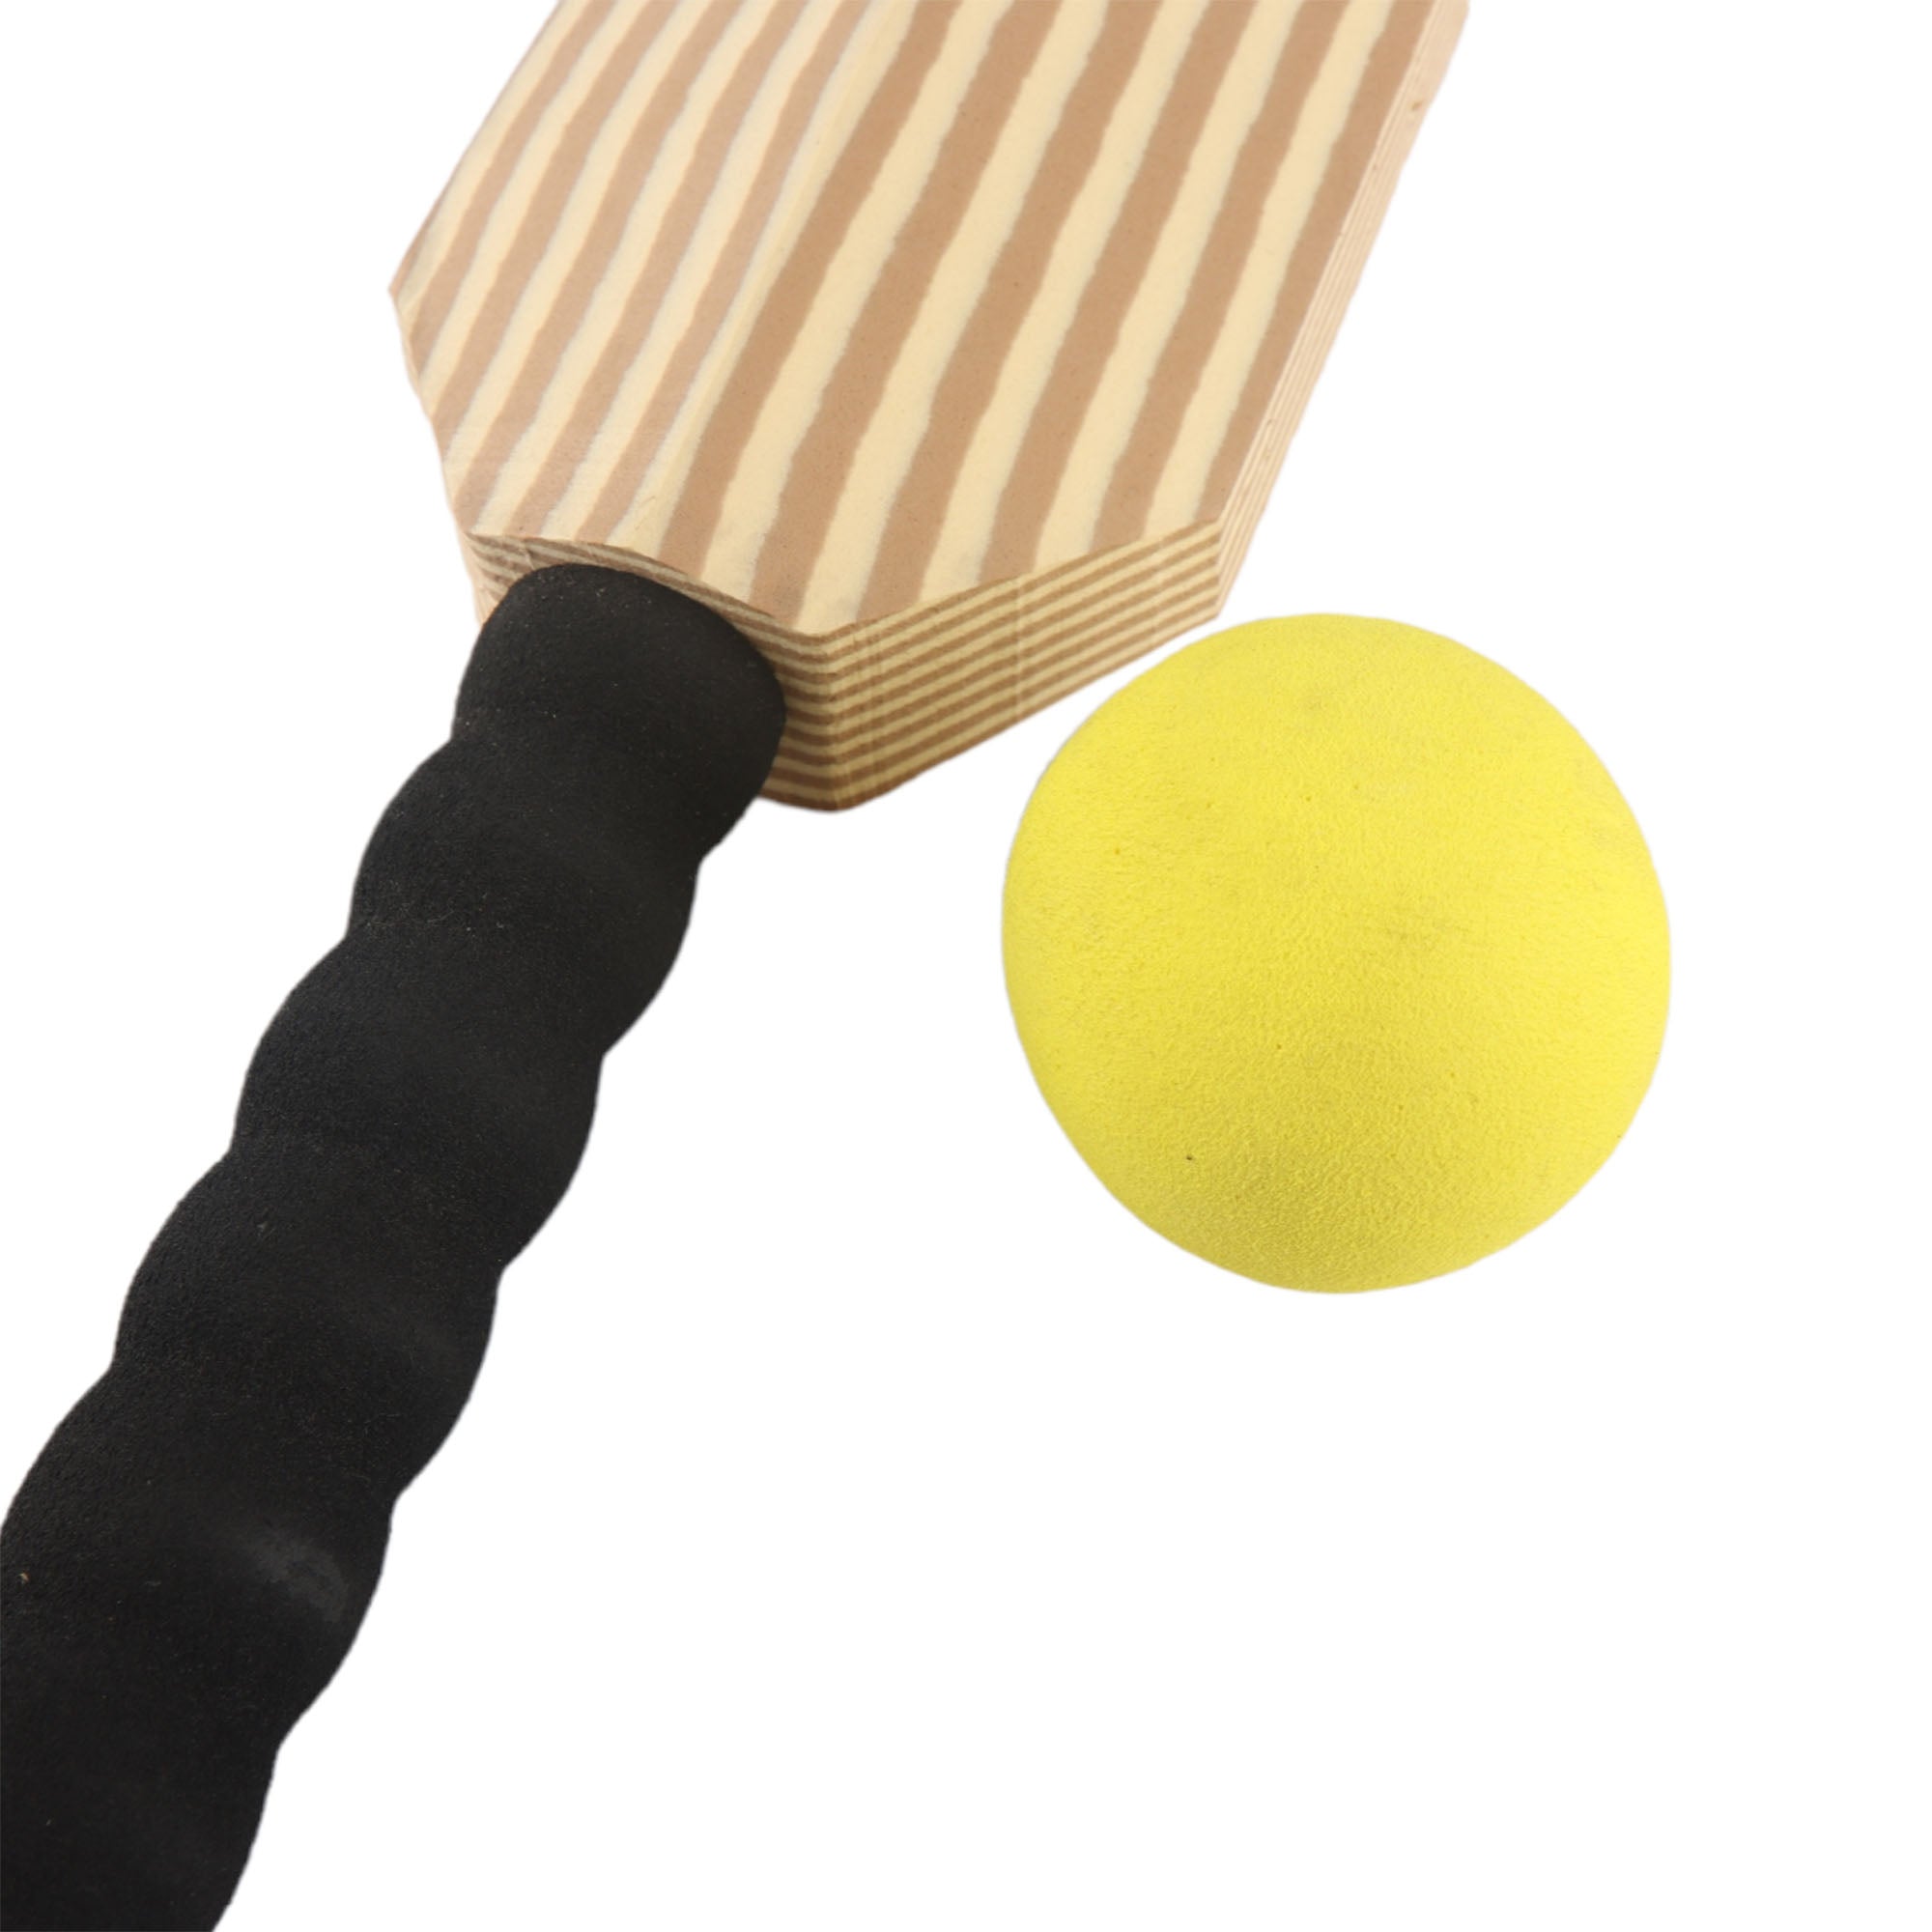 Cricket Bat and Ball Sponge Soft Set